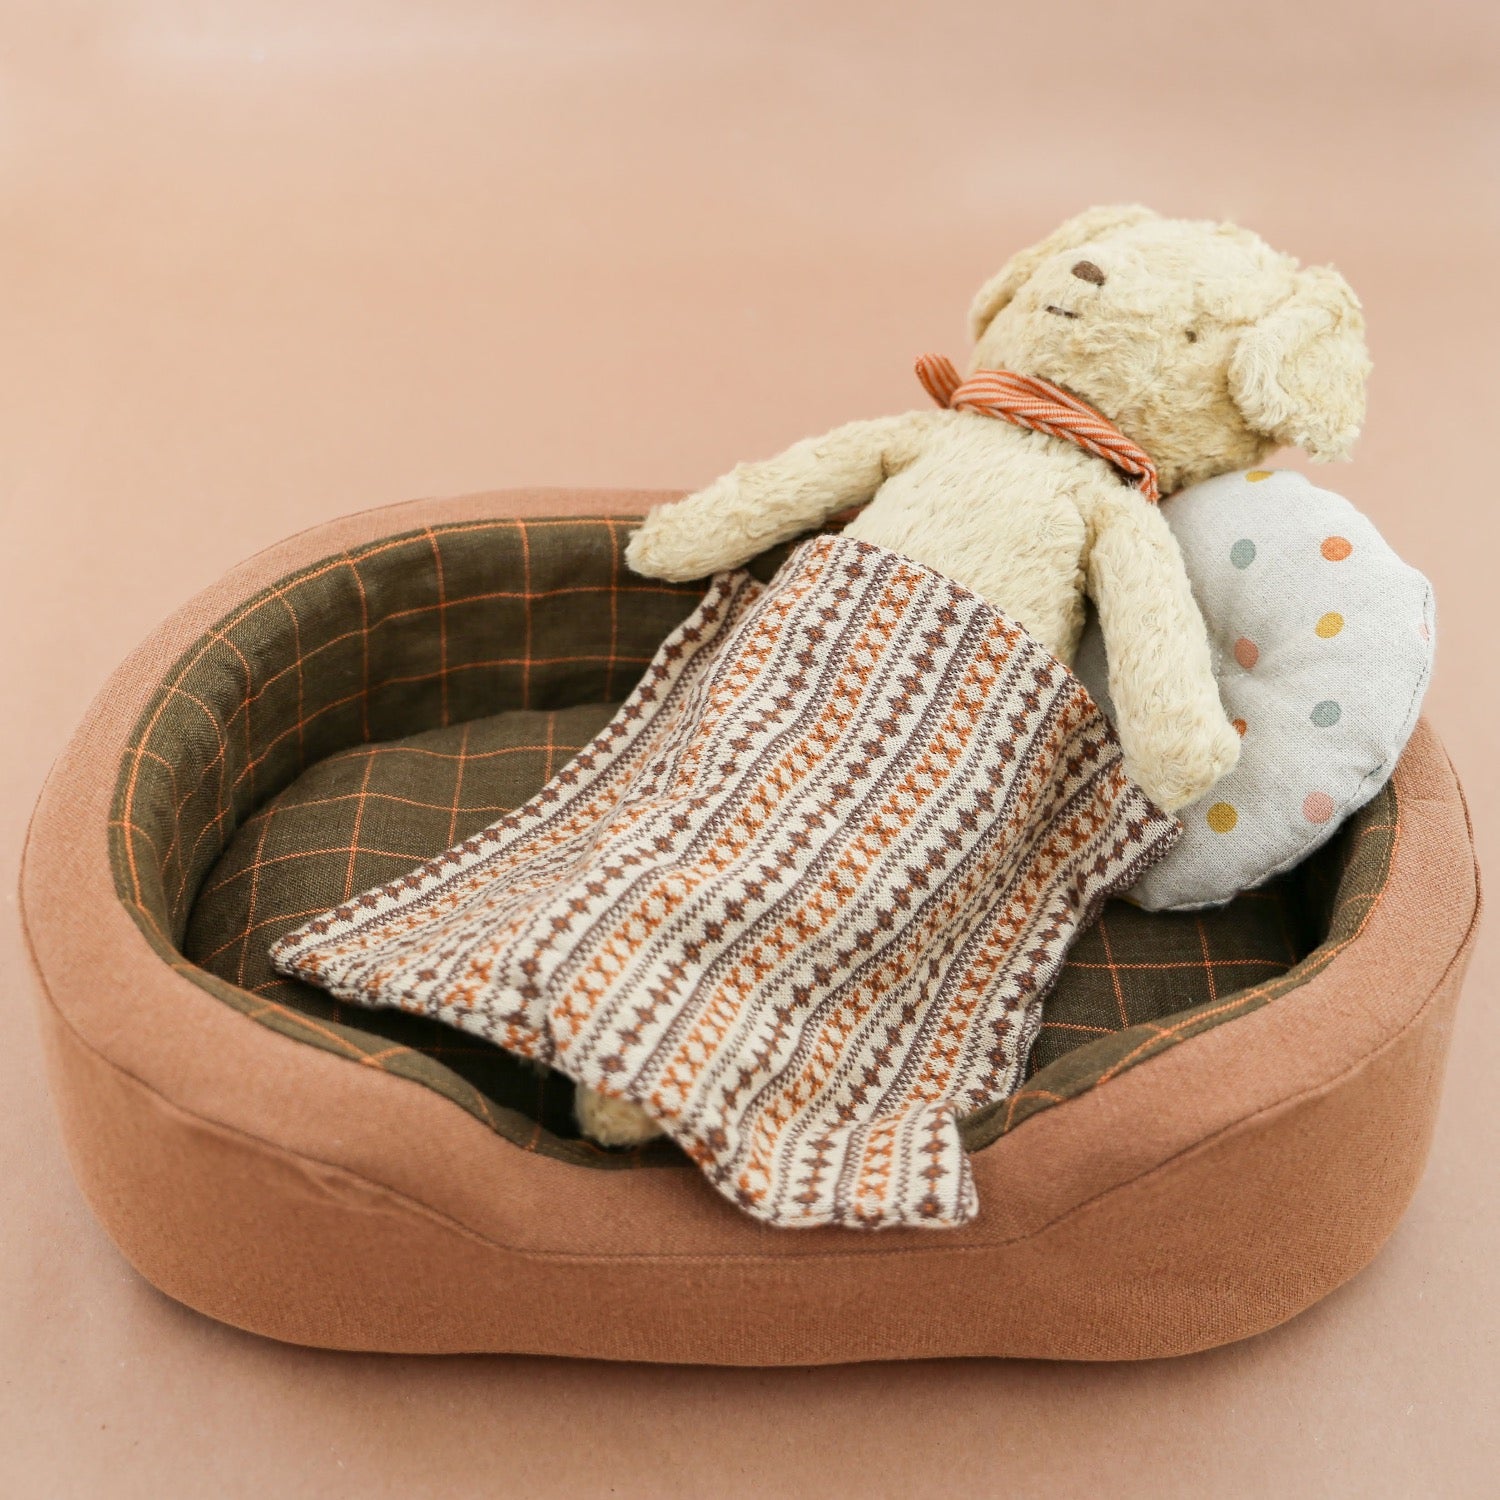 Maileg Dog Stuffed Animal in Dog Bed Basket